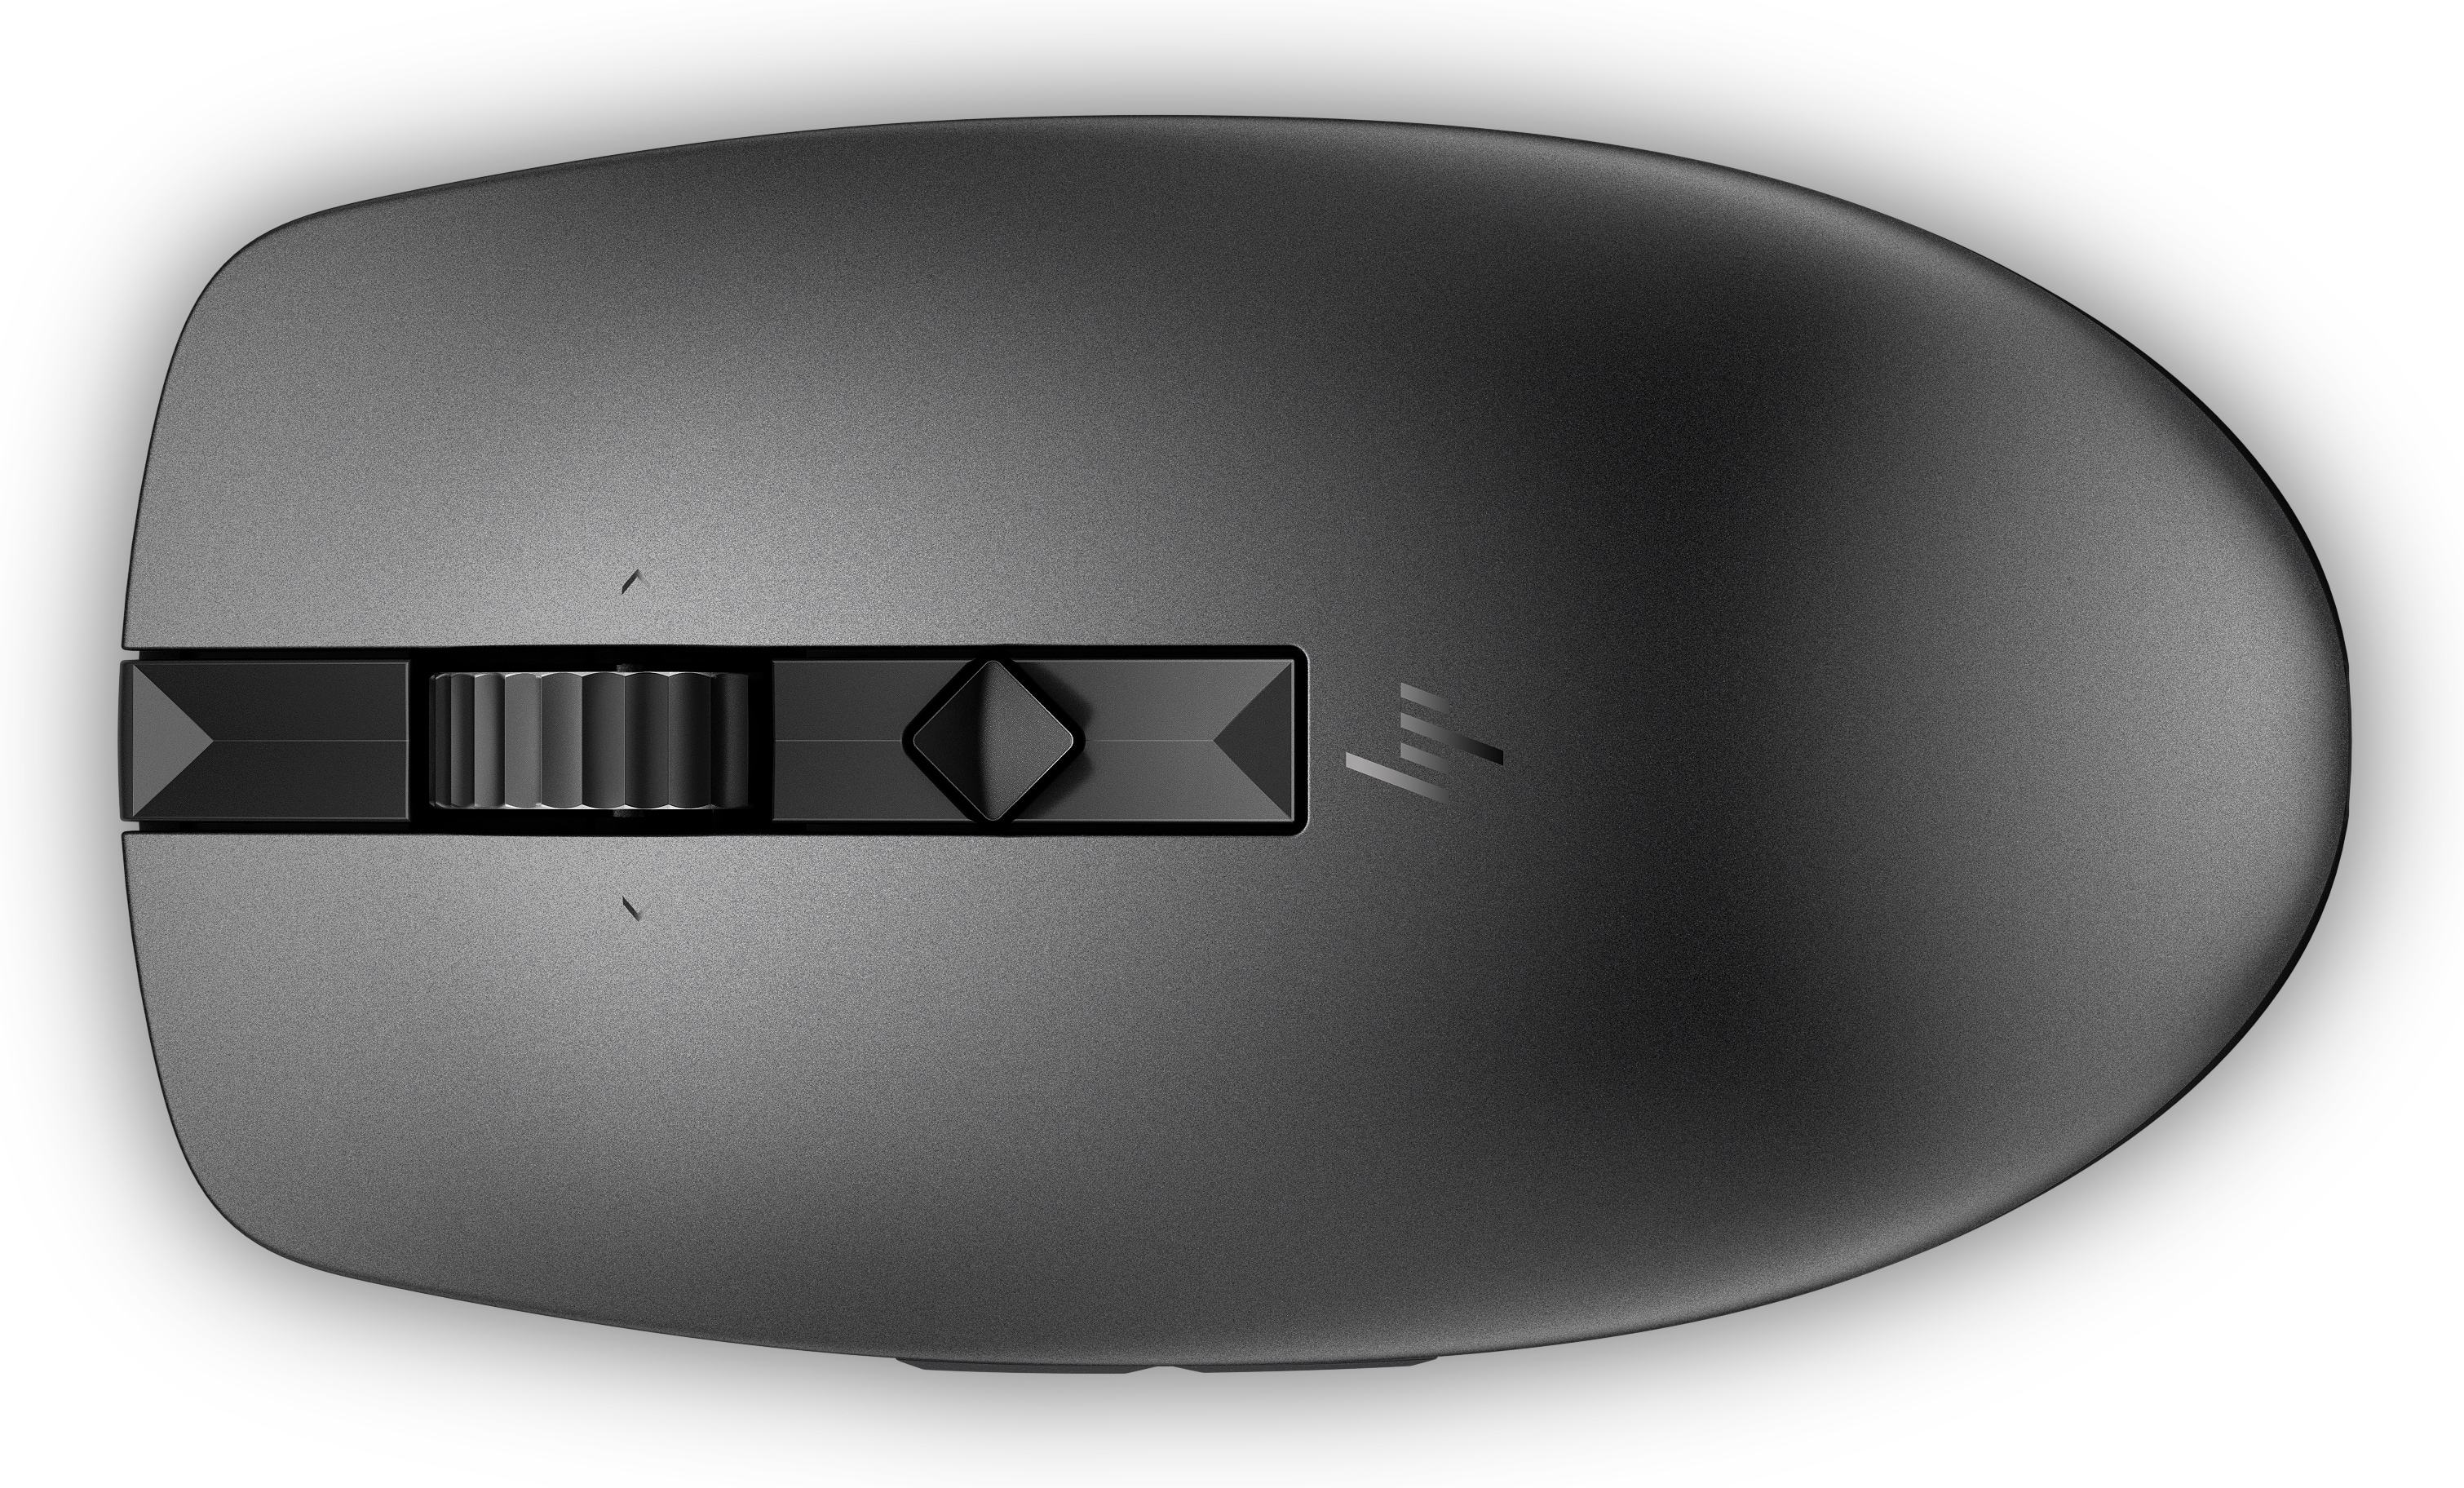 1D0K2AA HPI Multi-Device 635 Black Wireless Mouse Factory Sealed